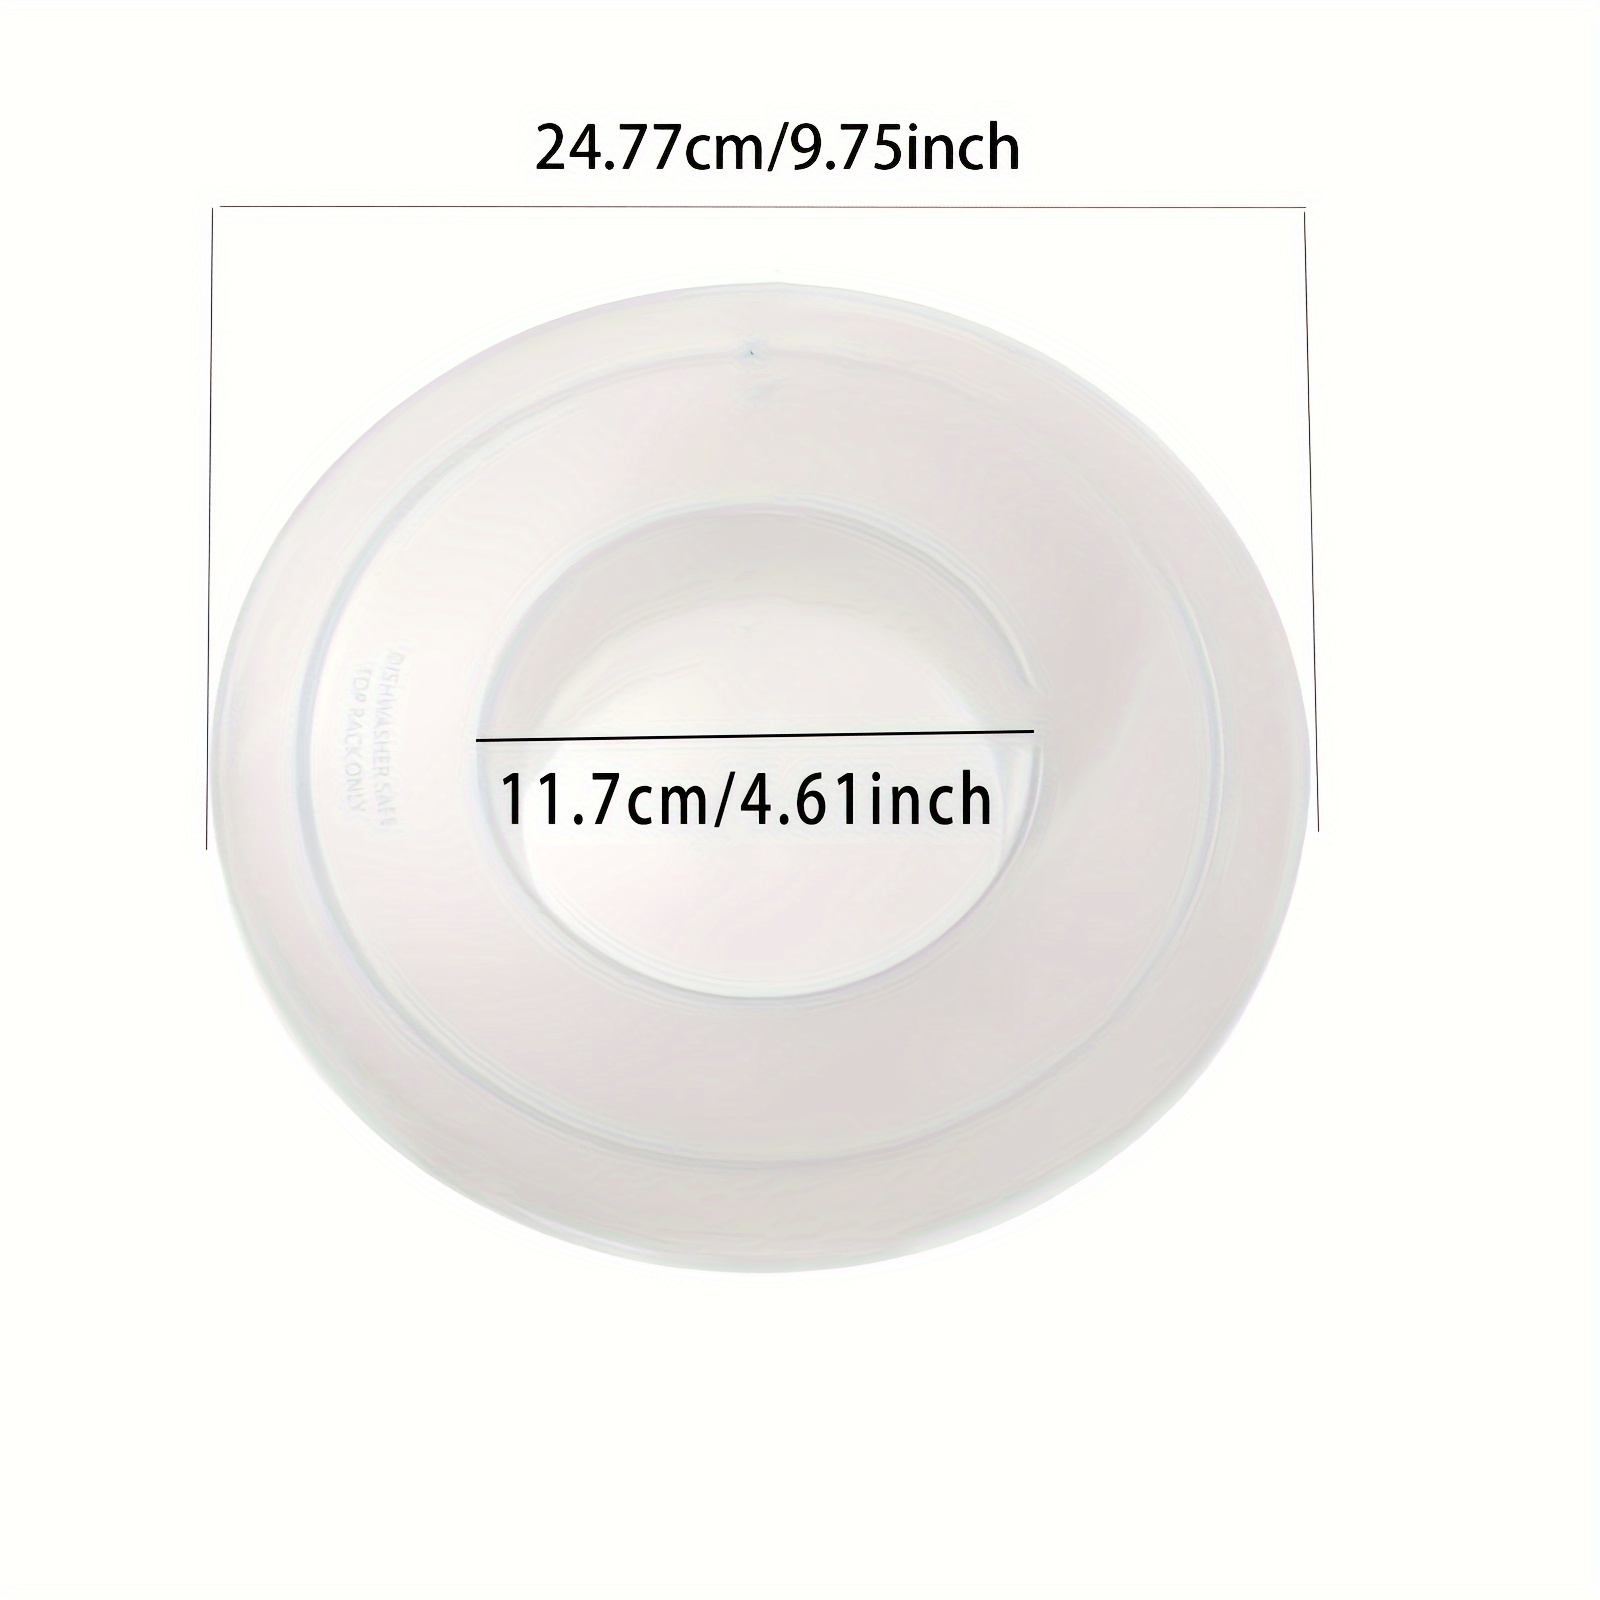 2 PCS Mixer Bowl Lid Covers for KitchenAid 5.5-6 Quart Bowls - Mixer Bowl  Covers